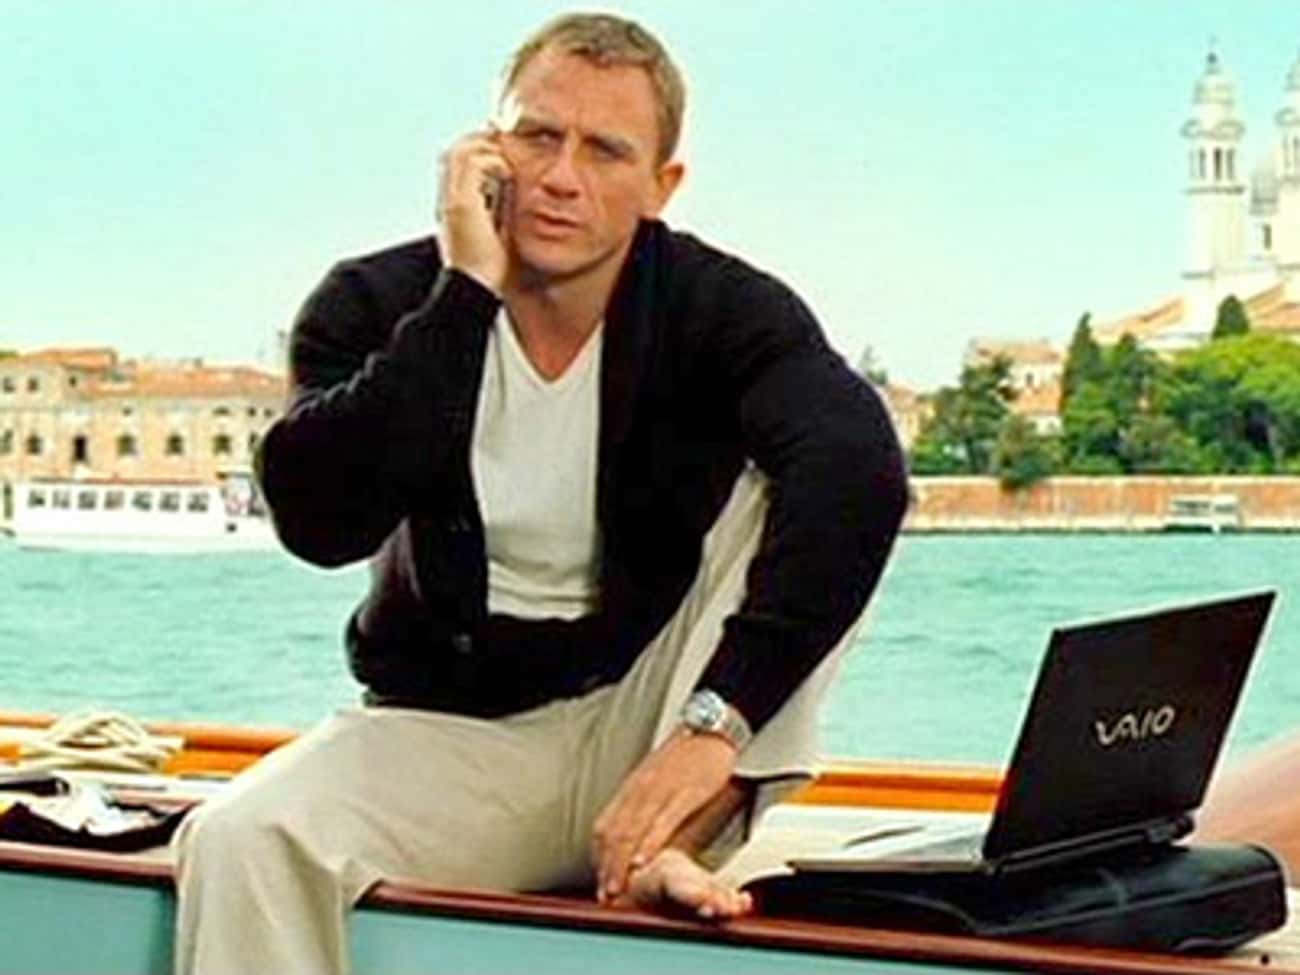 Shirtless Daniel Craig Pictures: List of Hot Daniel Craig Abs Pics